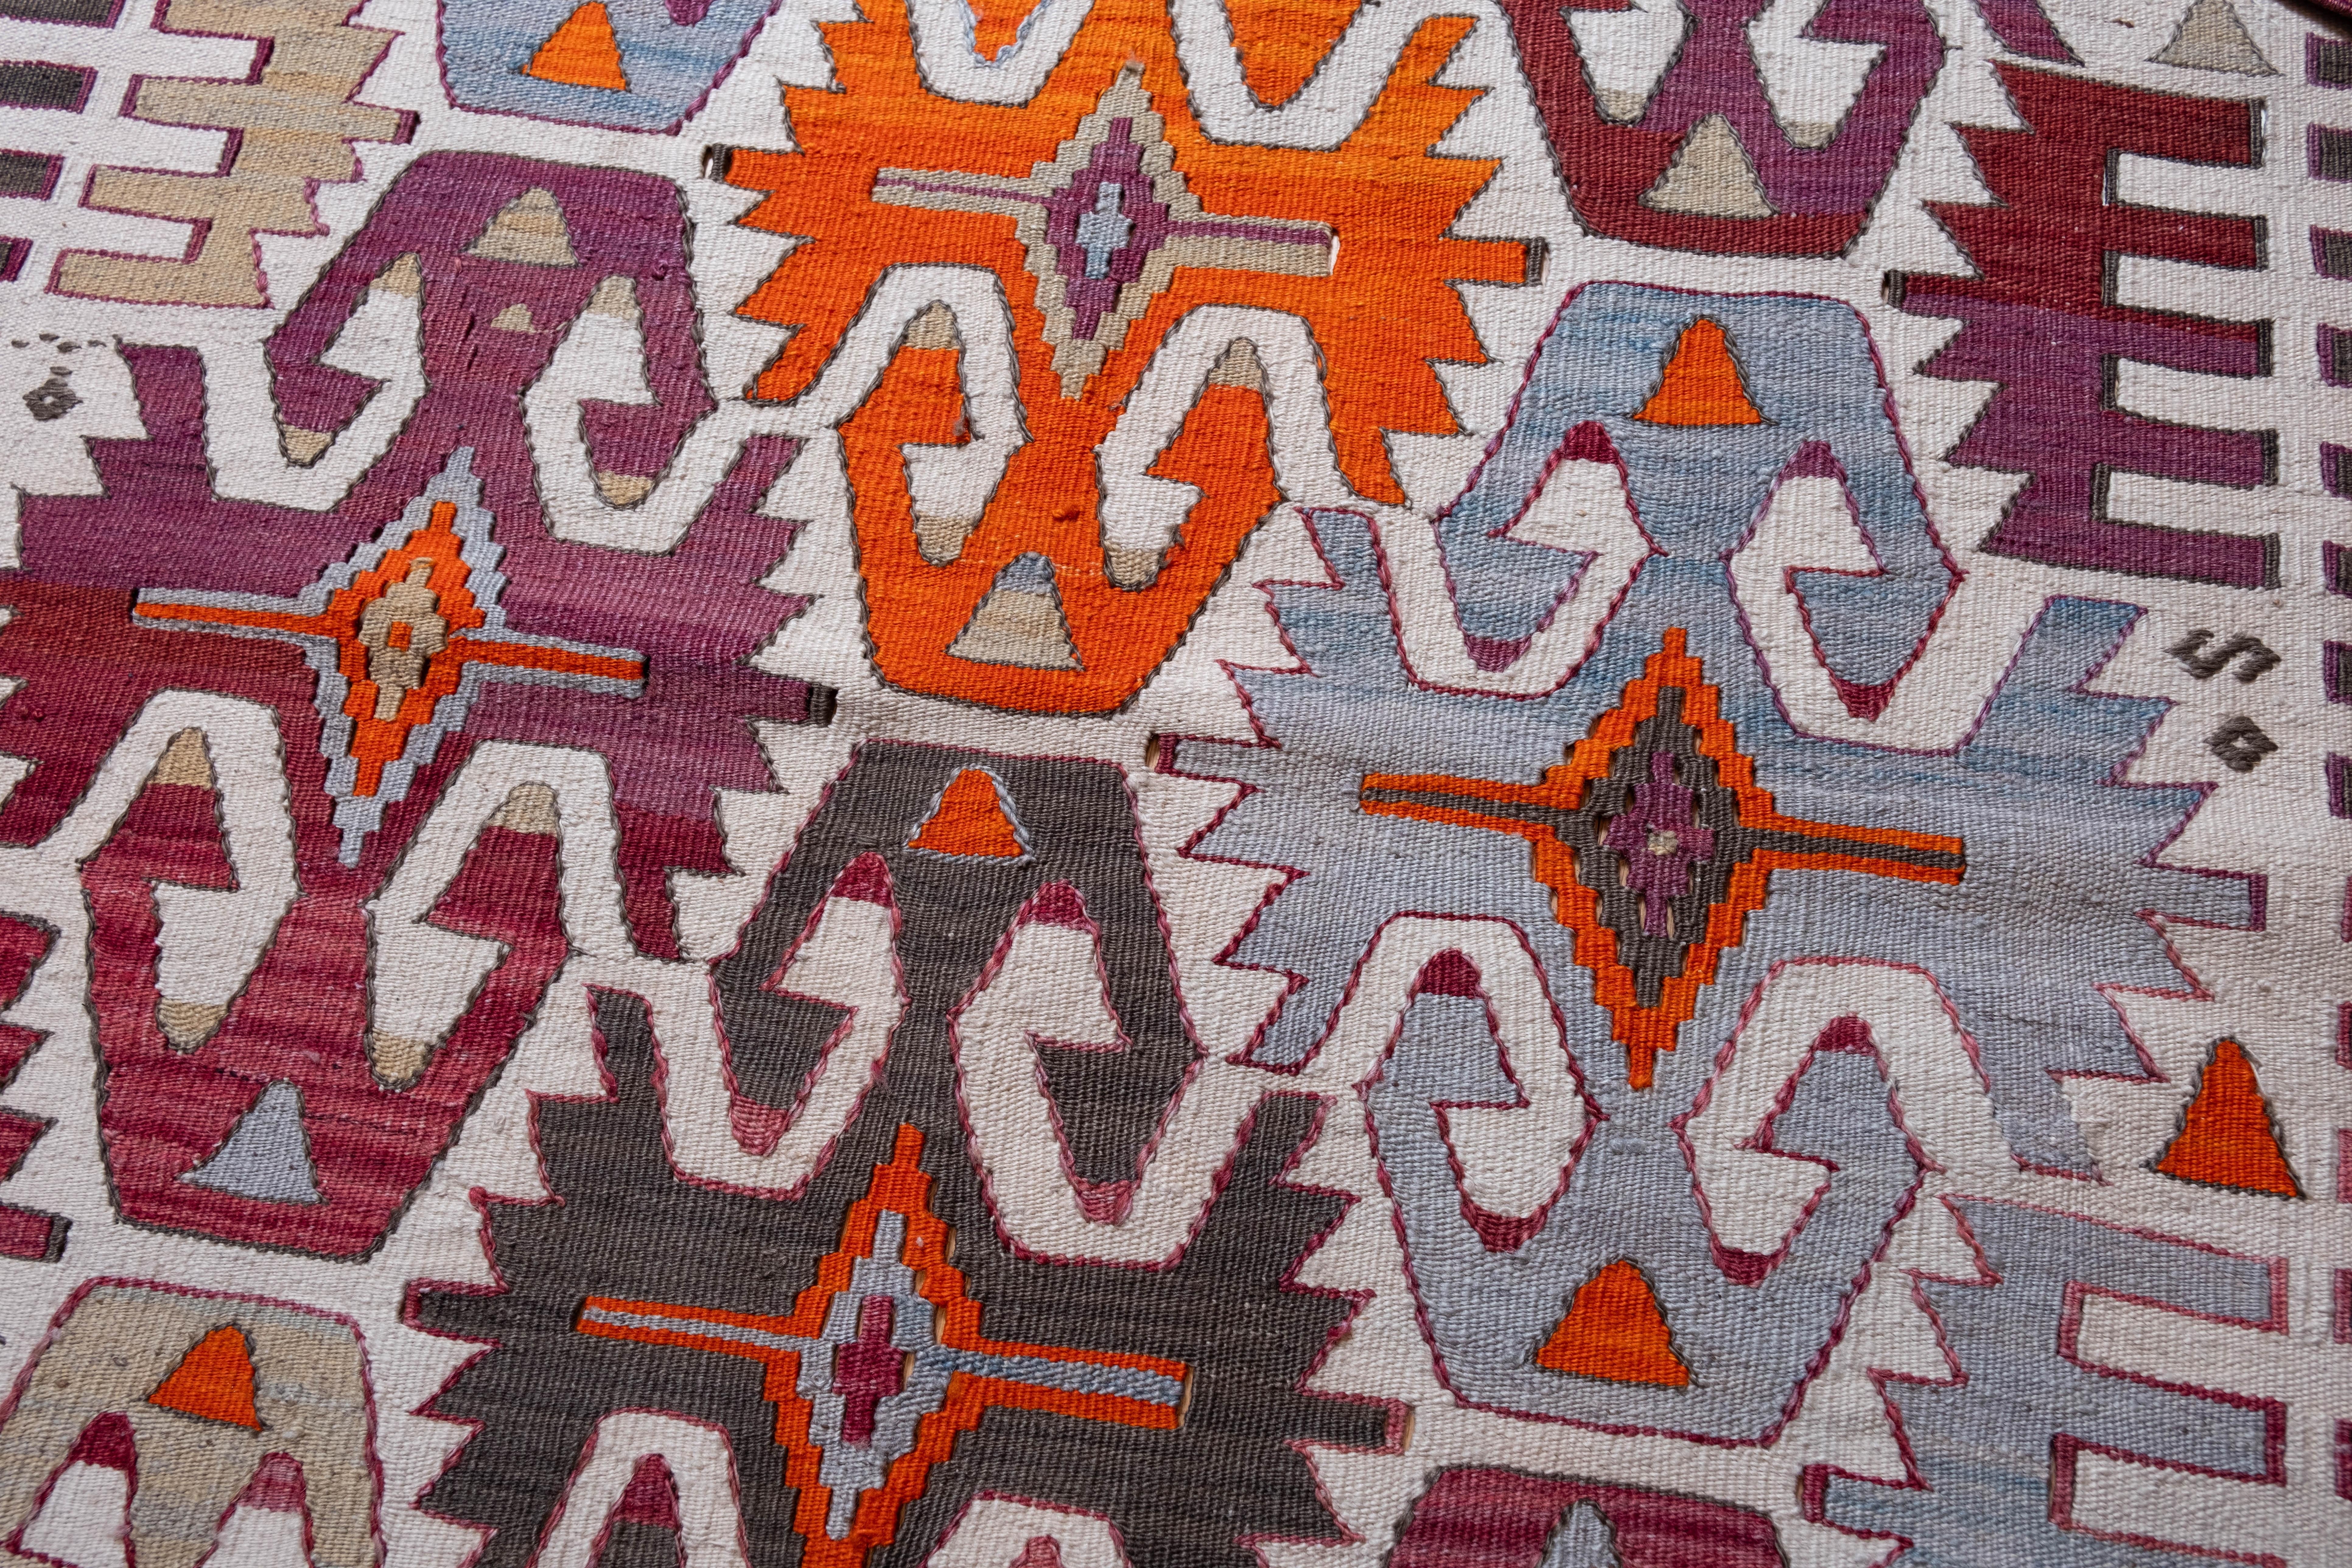 20th Century Antique Konya Kilim Rug Wool Old Central Anatolian Turkish Carpet For Sale